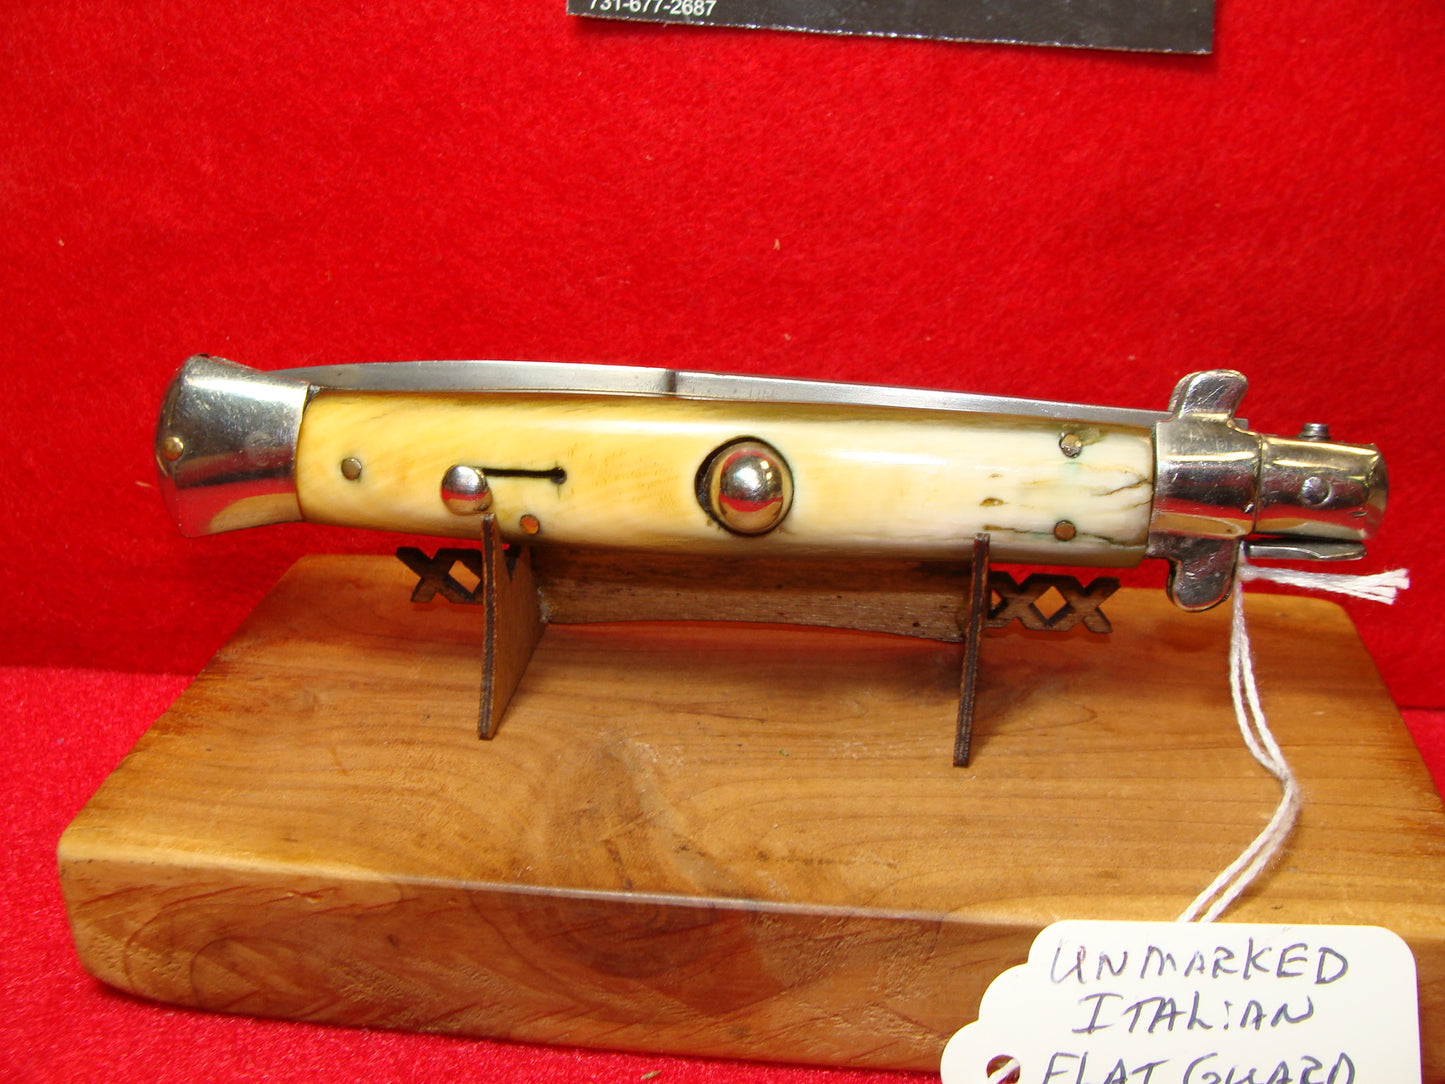 UNMARKED FLAT GUARD 1925-35 PICK LOCK STILETTO SMALL EARS 10 1/4" ITALIAN AUTOMATIC KNIFE BRAZILIAN HORN HANDLES